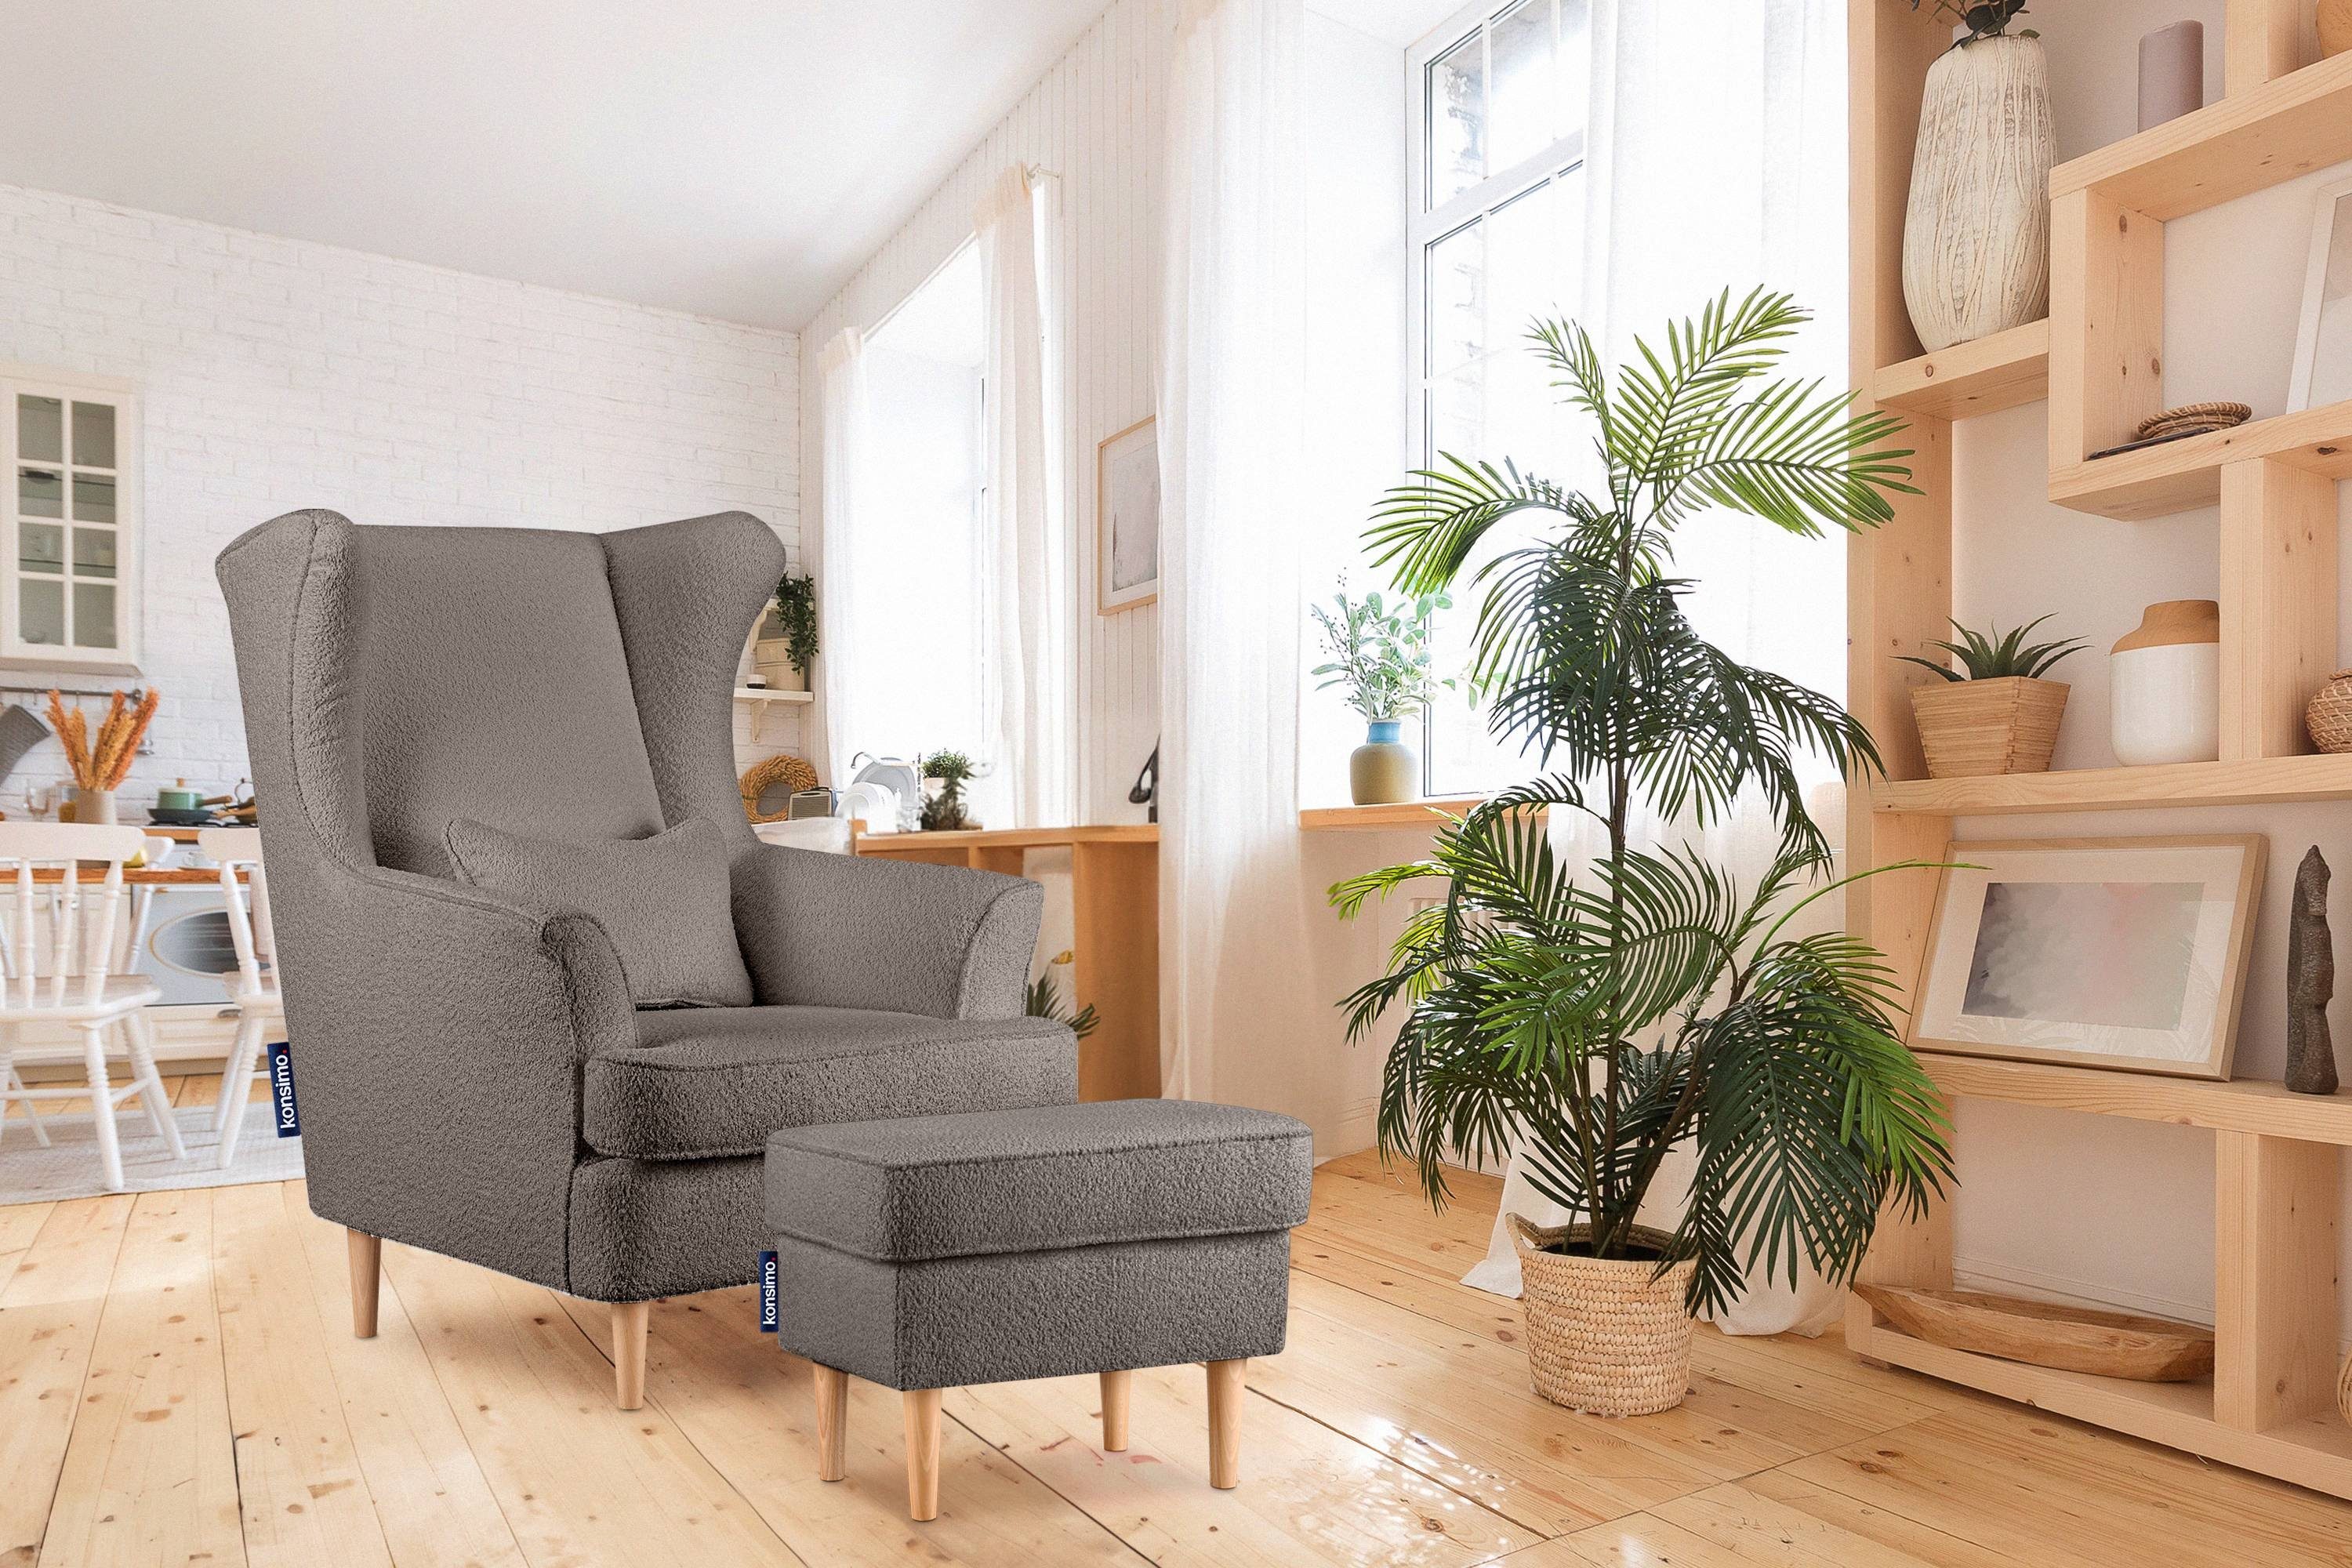 Konsimo Ohrensessel STRALIS Sessel, inklusive dekorativem Design, Füße, hohe Kissen zeitloses